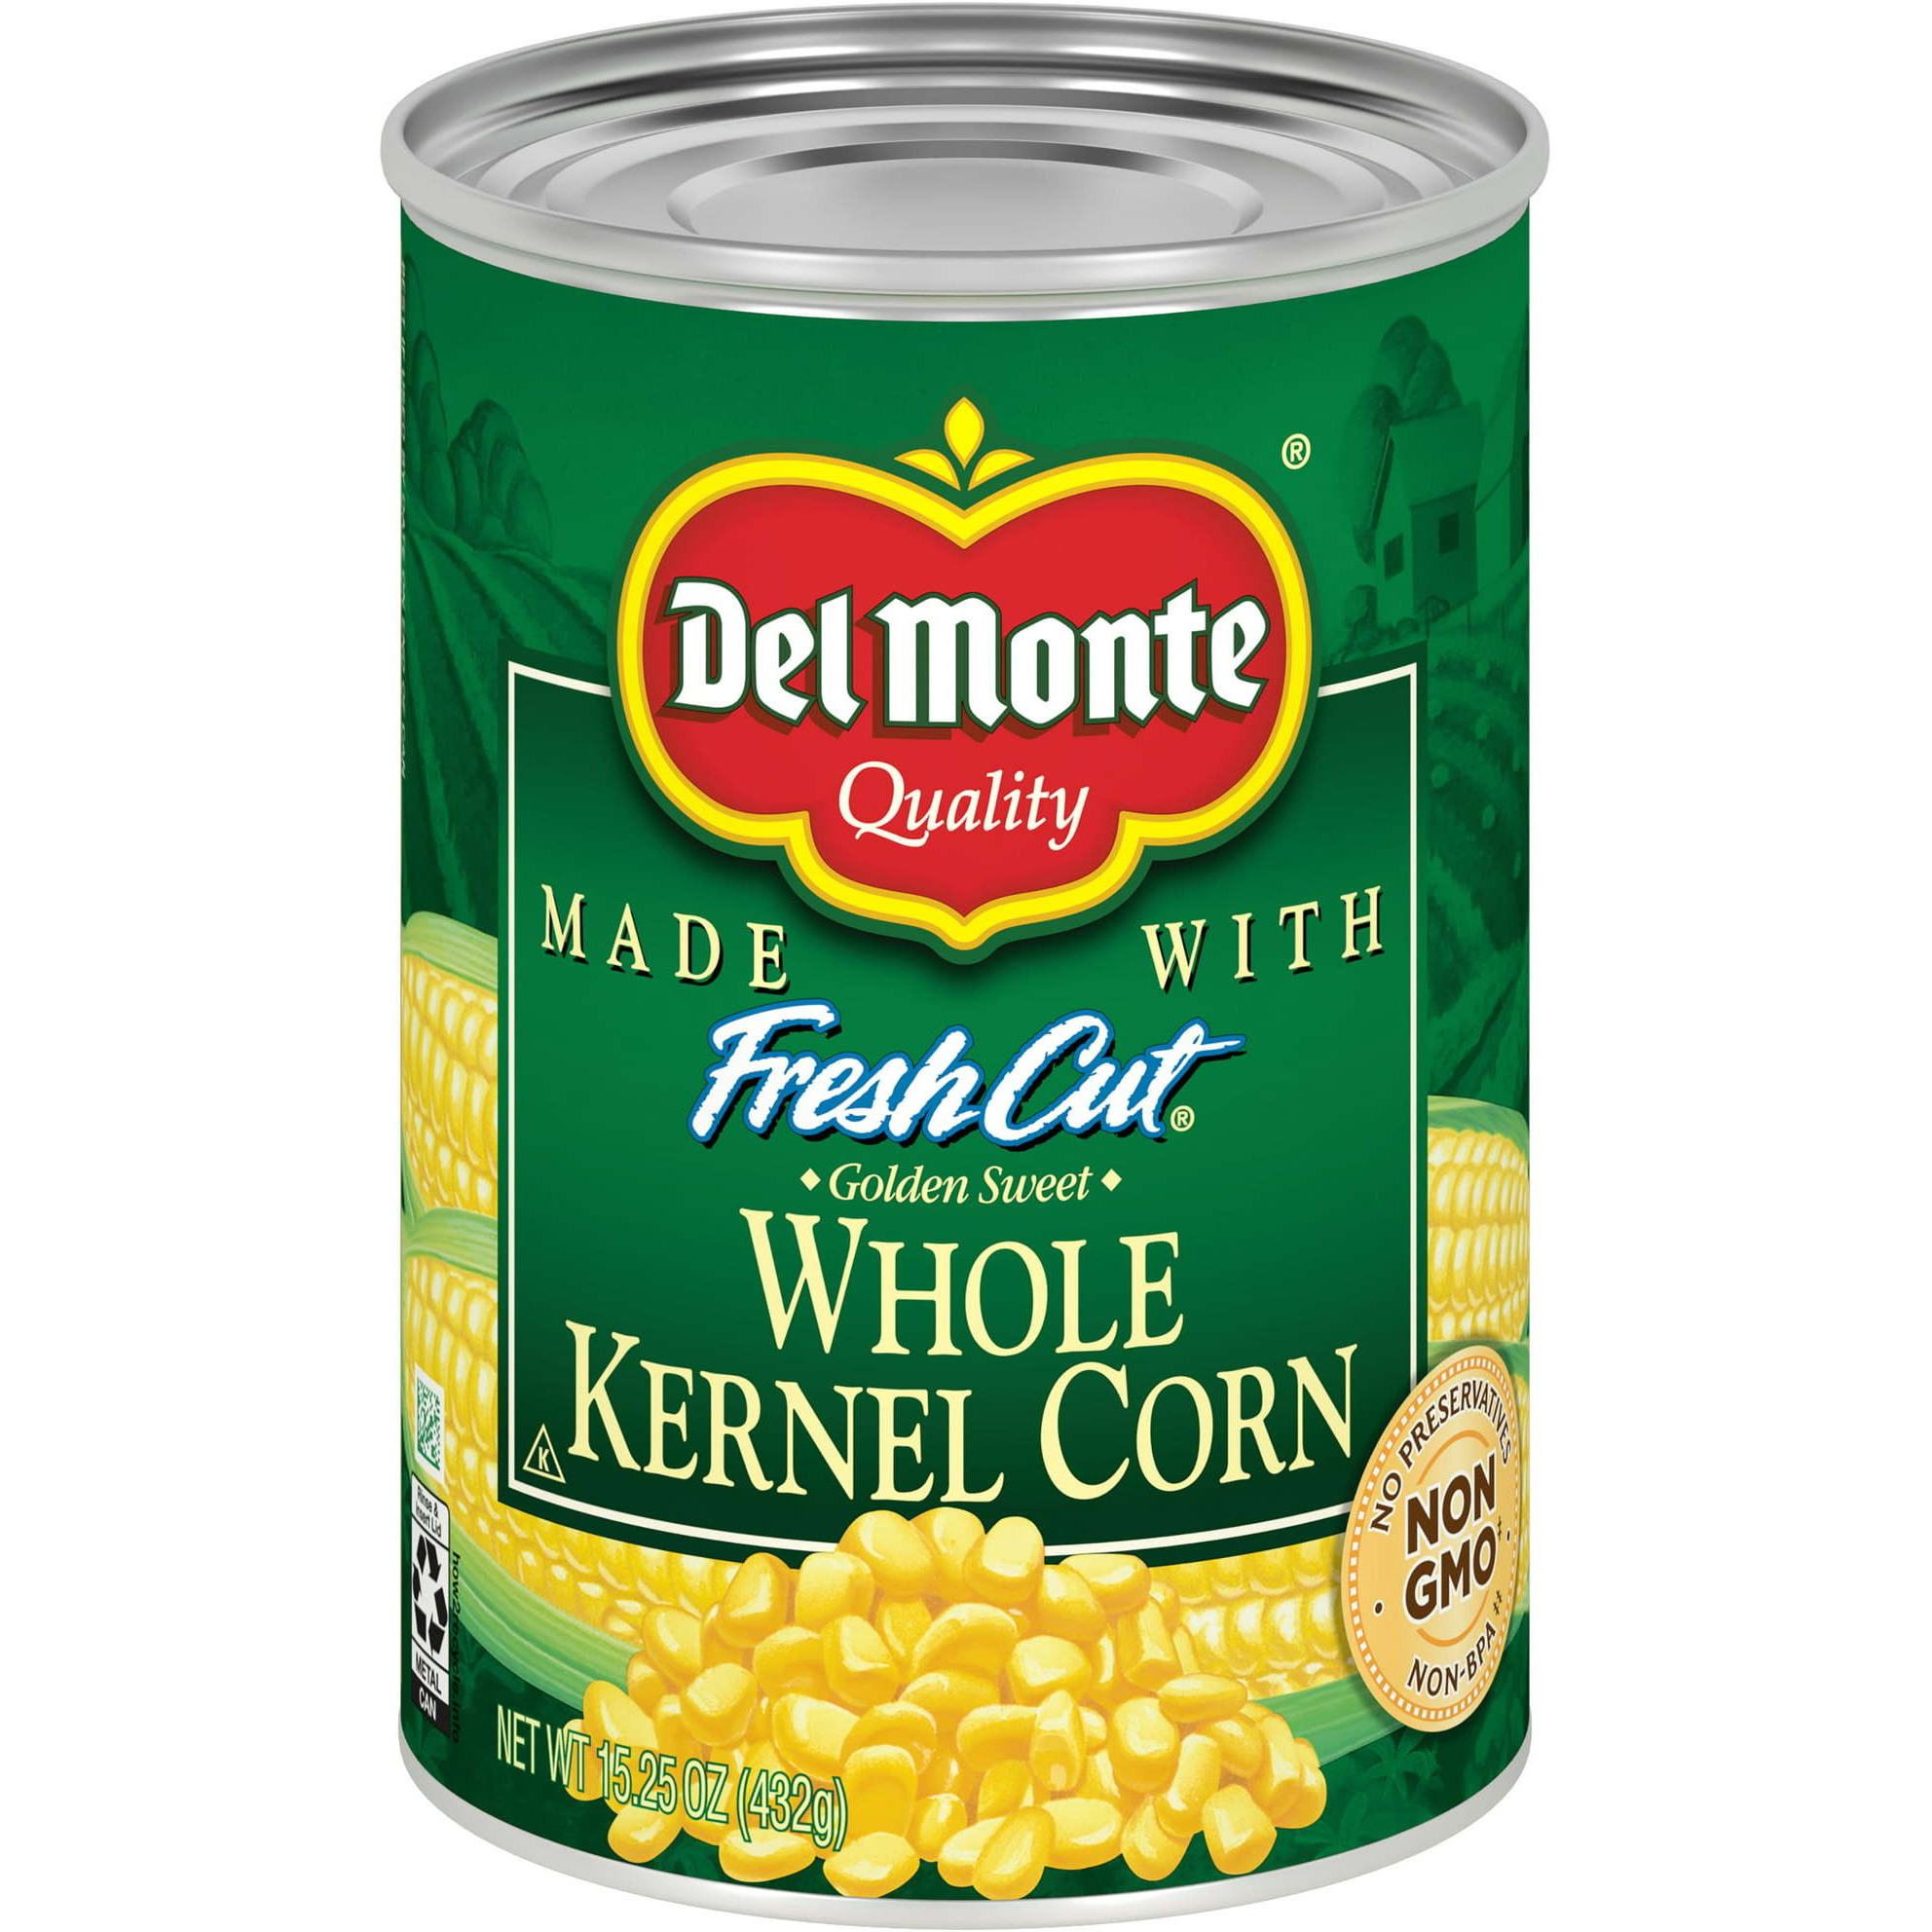 Del Monte Golden Sweet Whole Kernel Corn - 15.25 Oz (432 Gm) [50% Off]